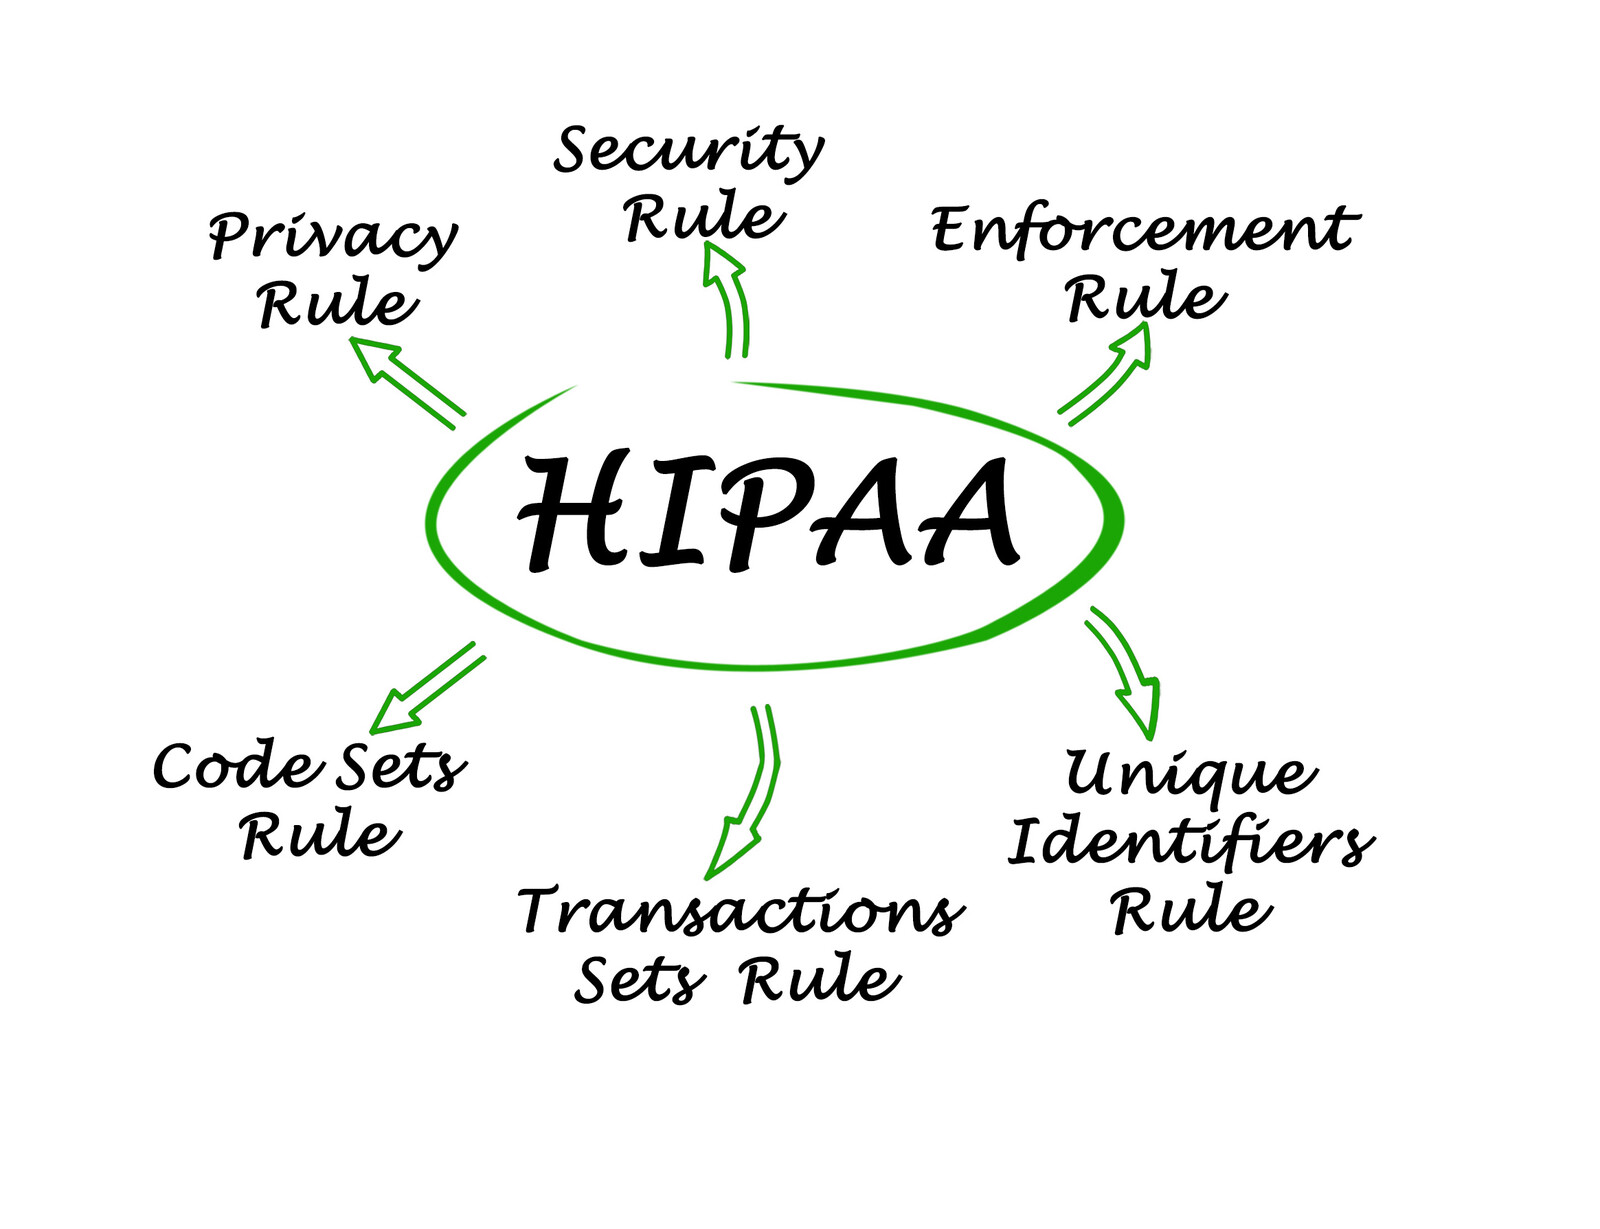 HIPAA Enforcement Rule